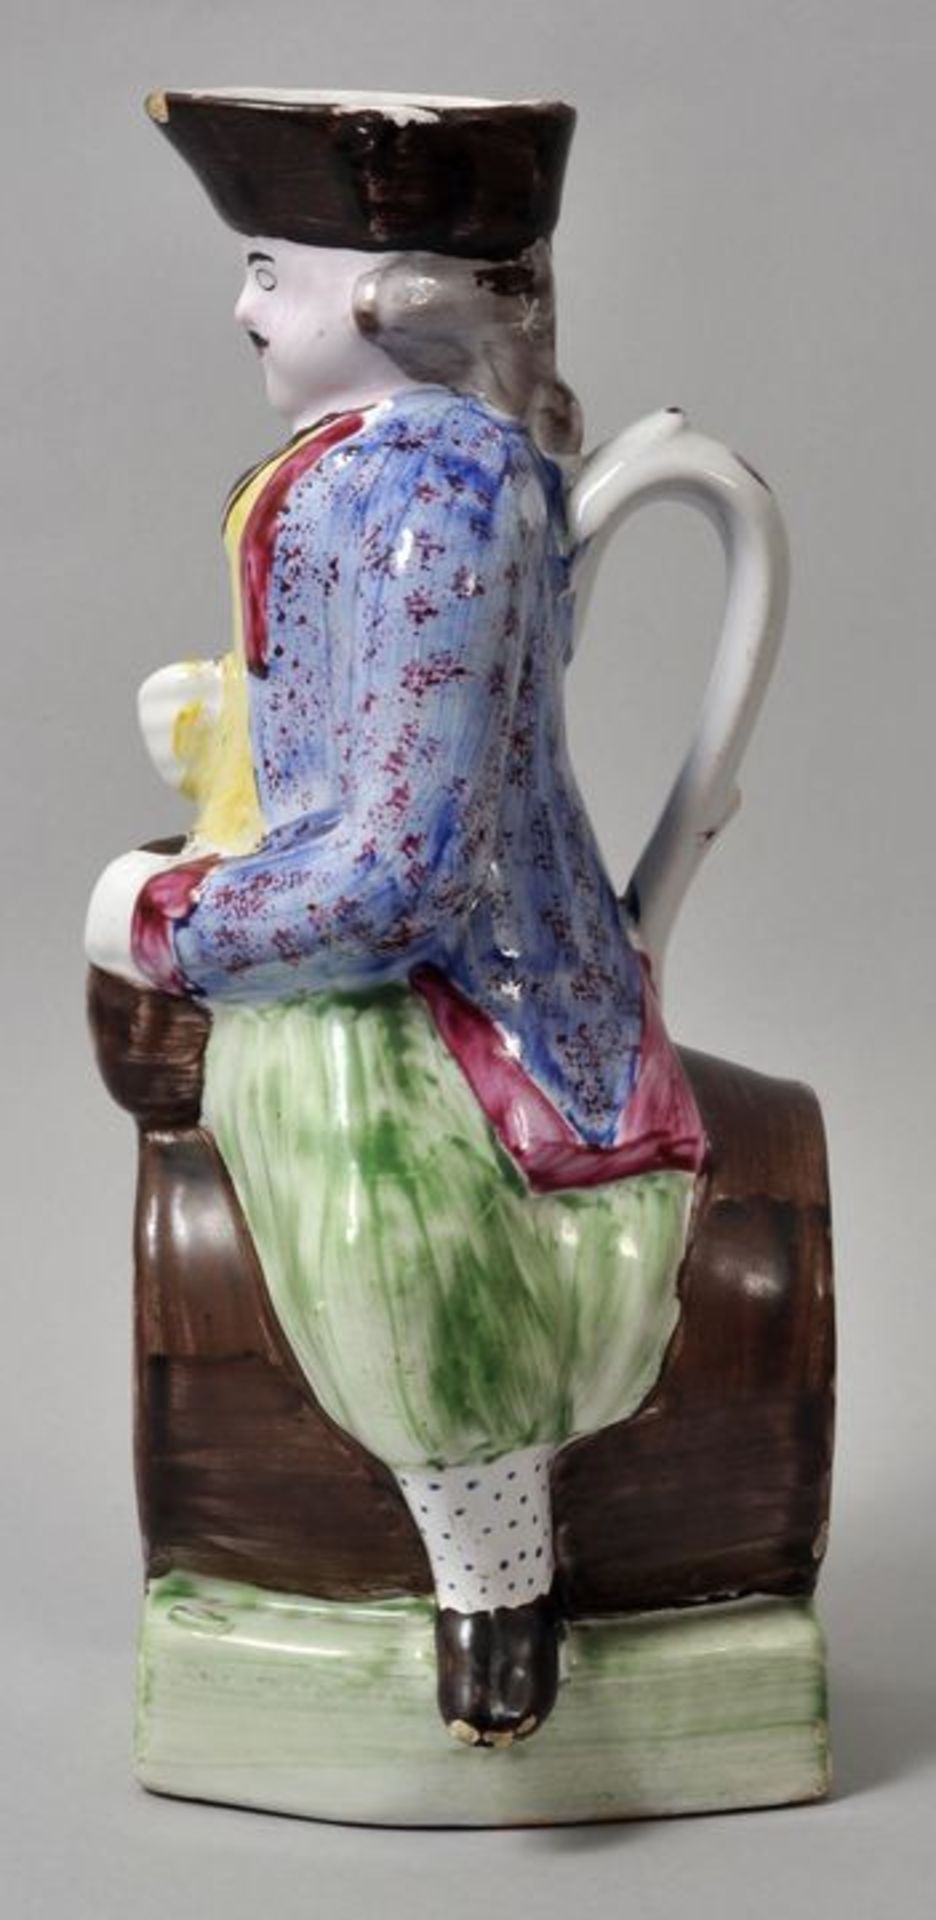 Figurenkrug/ Toby jug, wohl England, 19. Jh.Keramik, polychrome Bemalung. Gestalt eines Mannes mit - Bild 2 aus 3